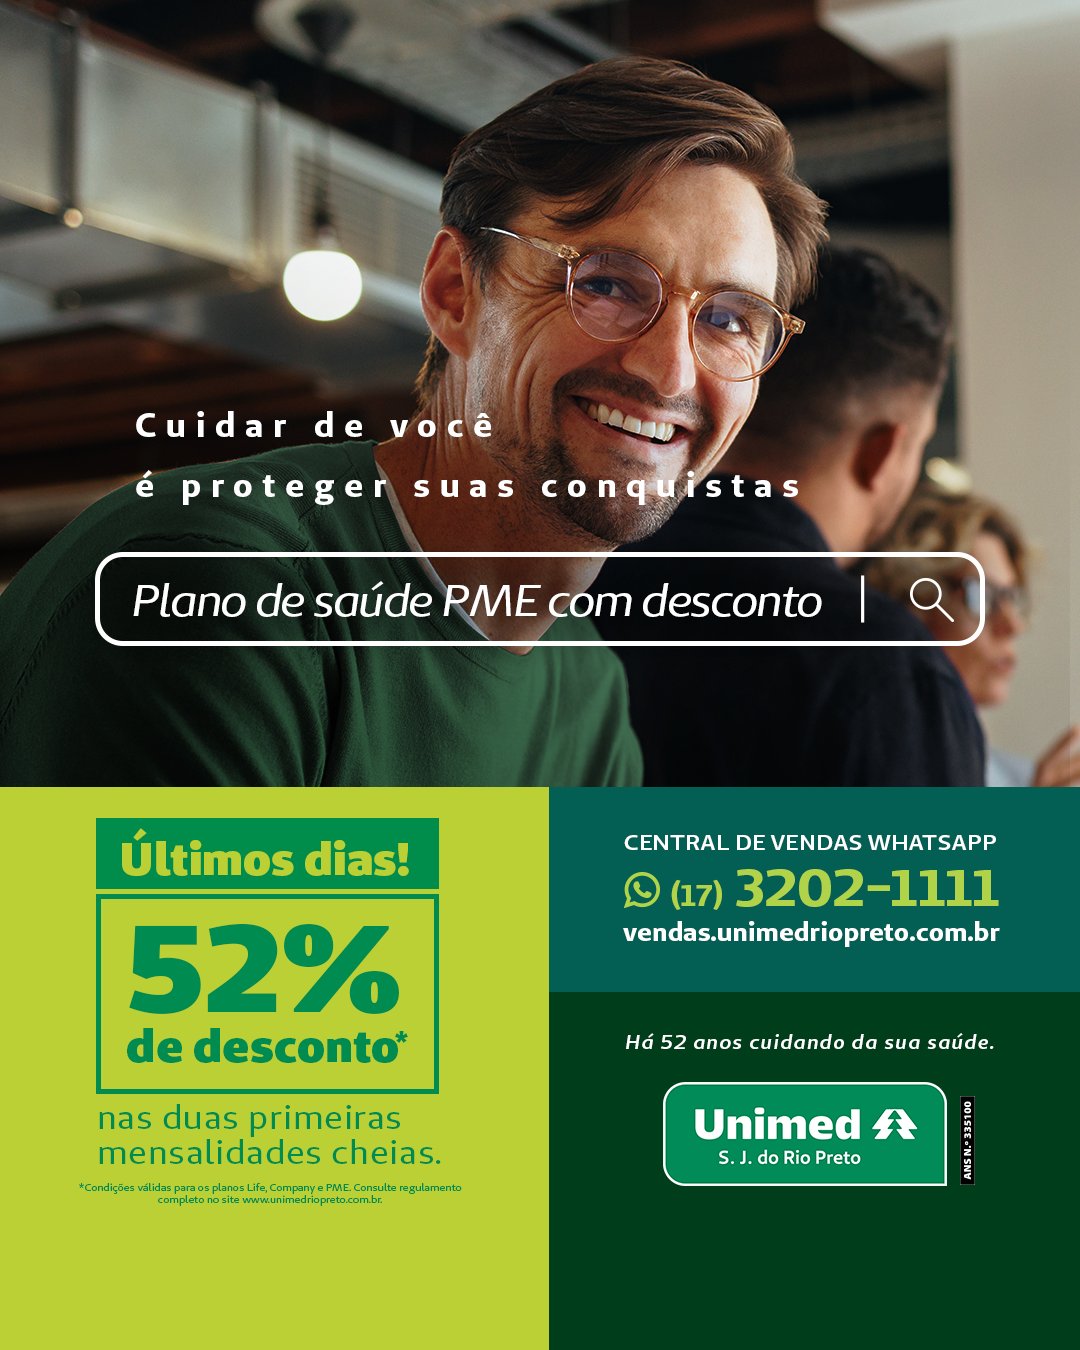 Unimed Rio - Oficial Planos de Saúde